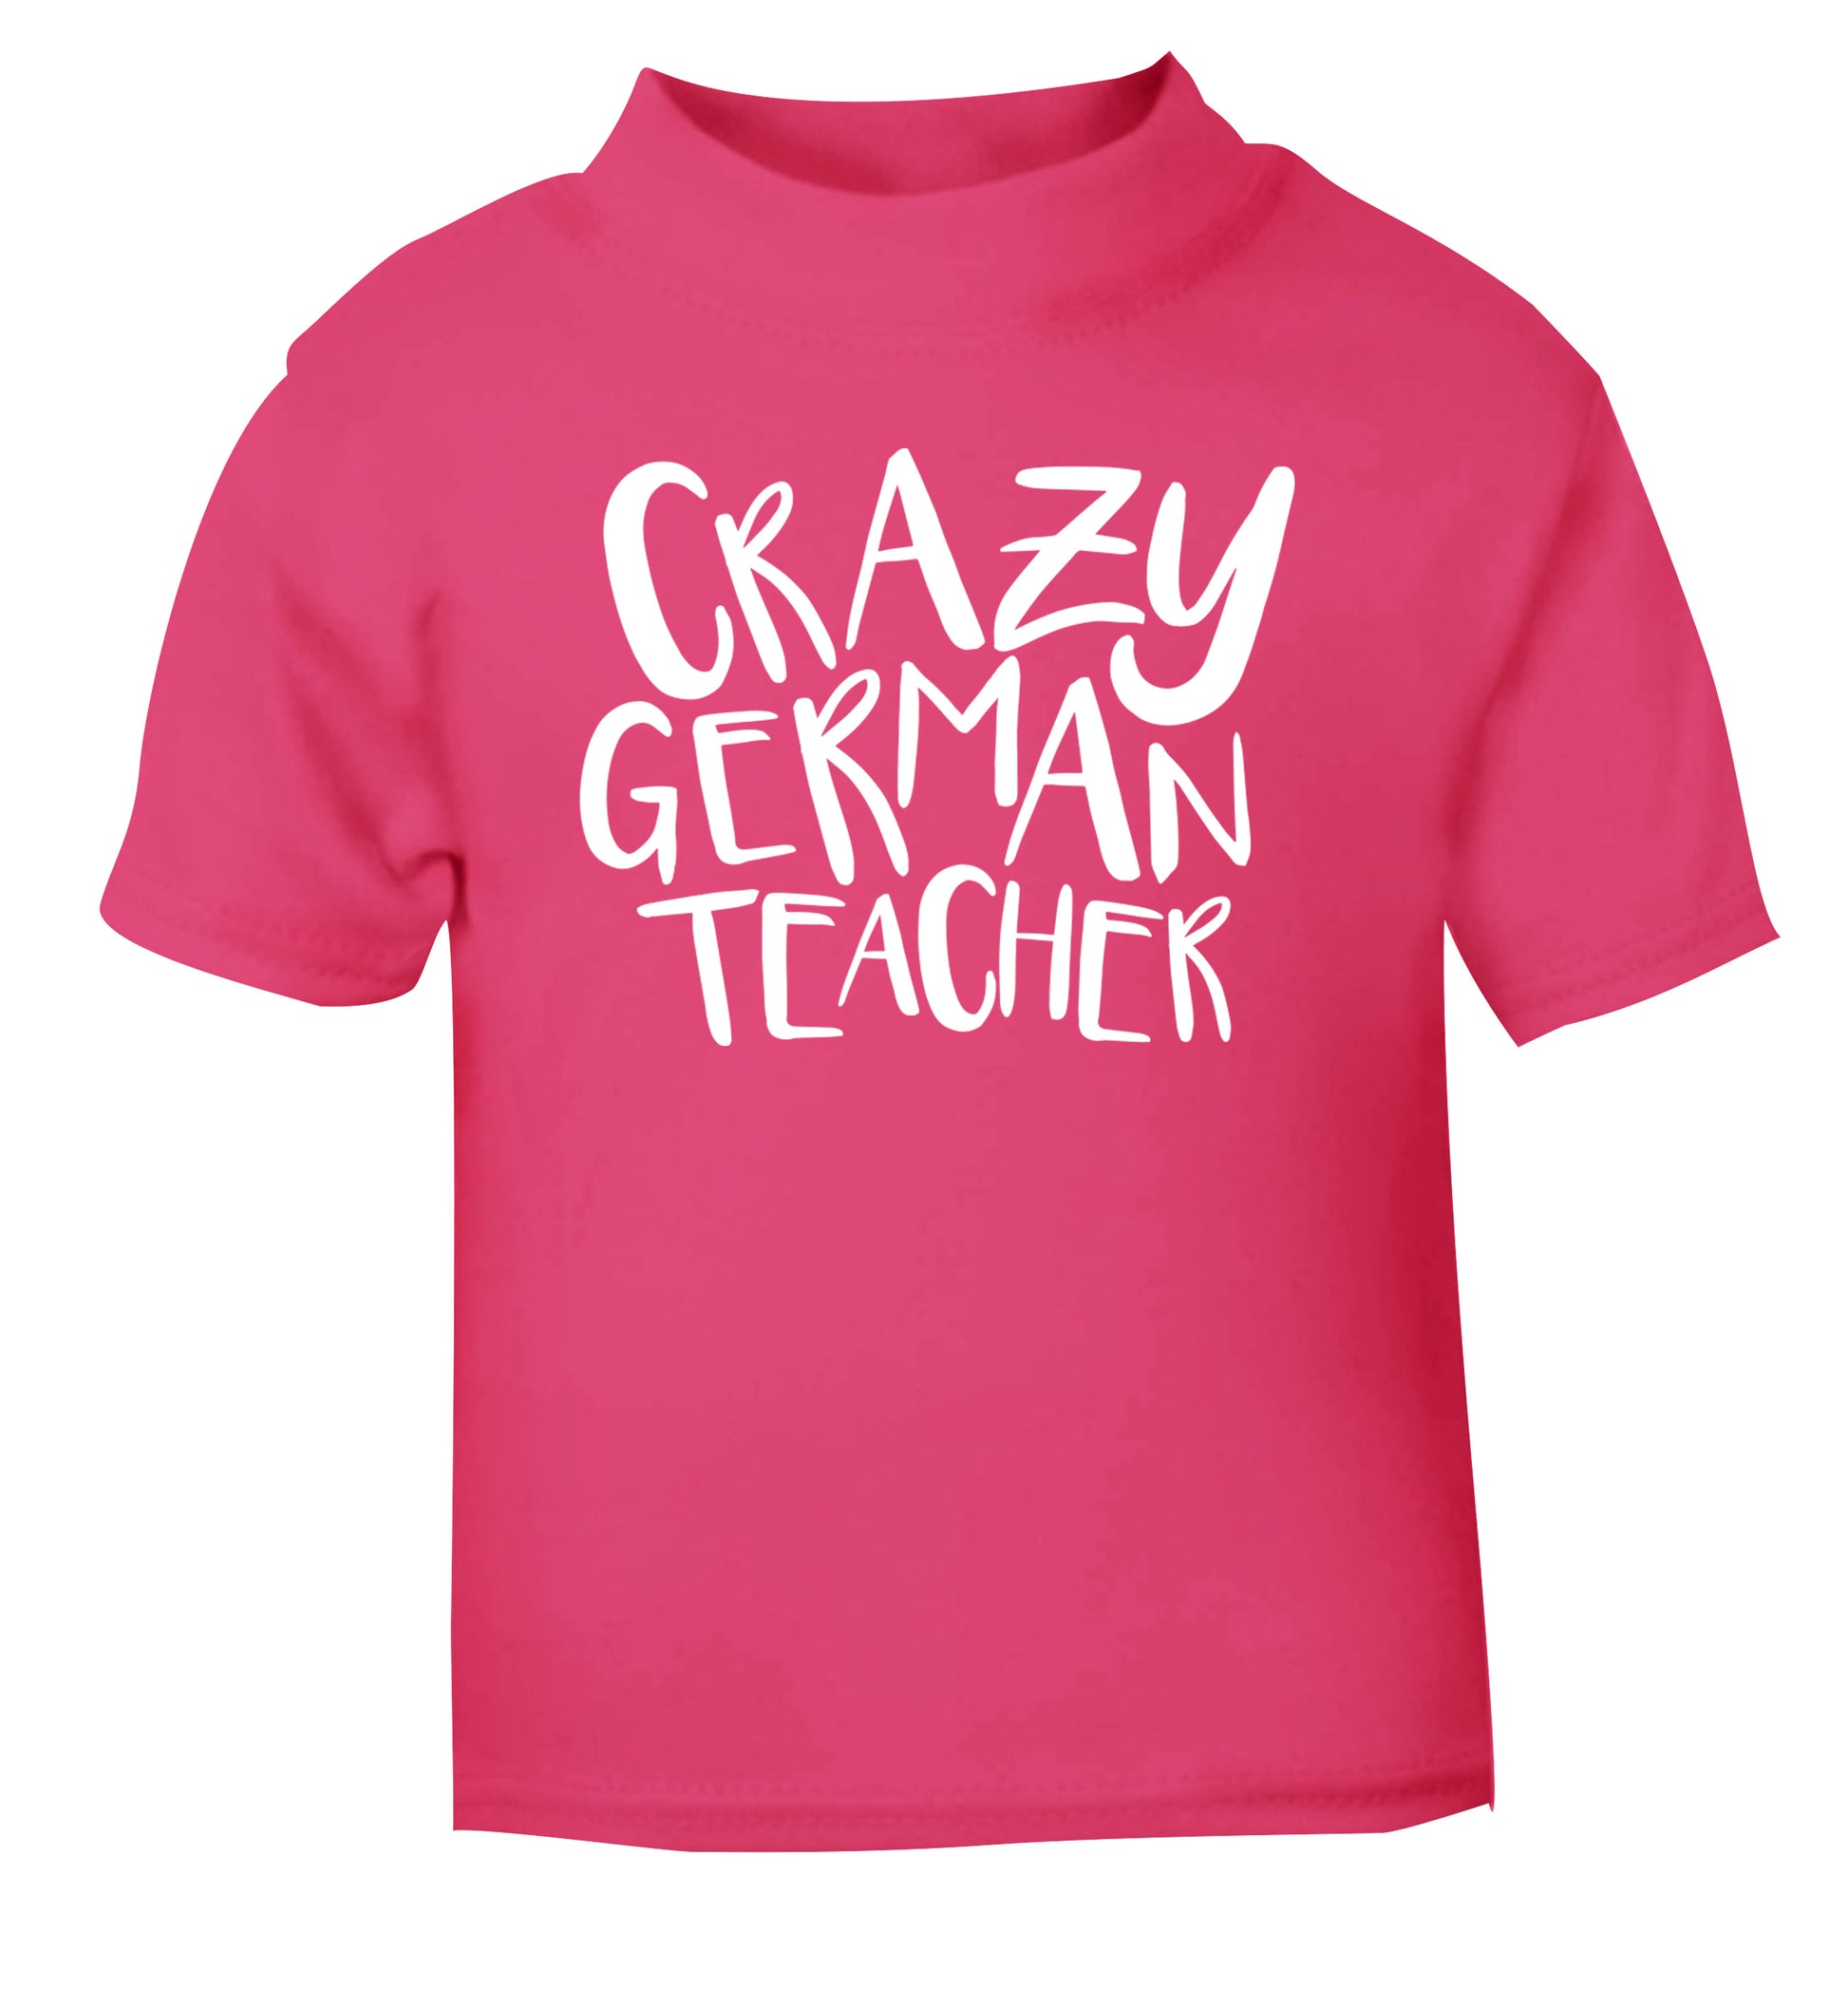 Crazy german teacher pink Baby Toddler Tshirt 2 Years